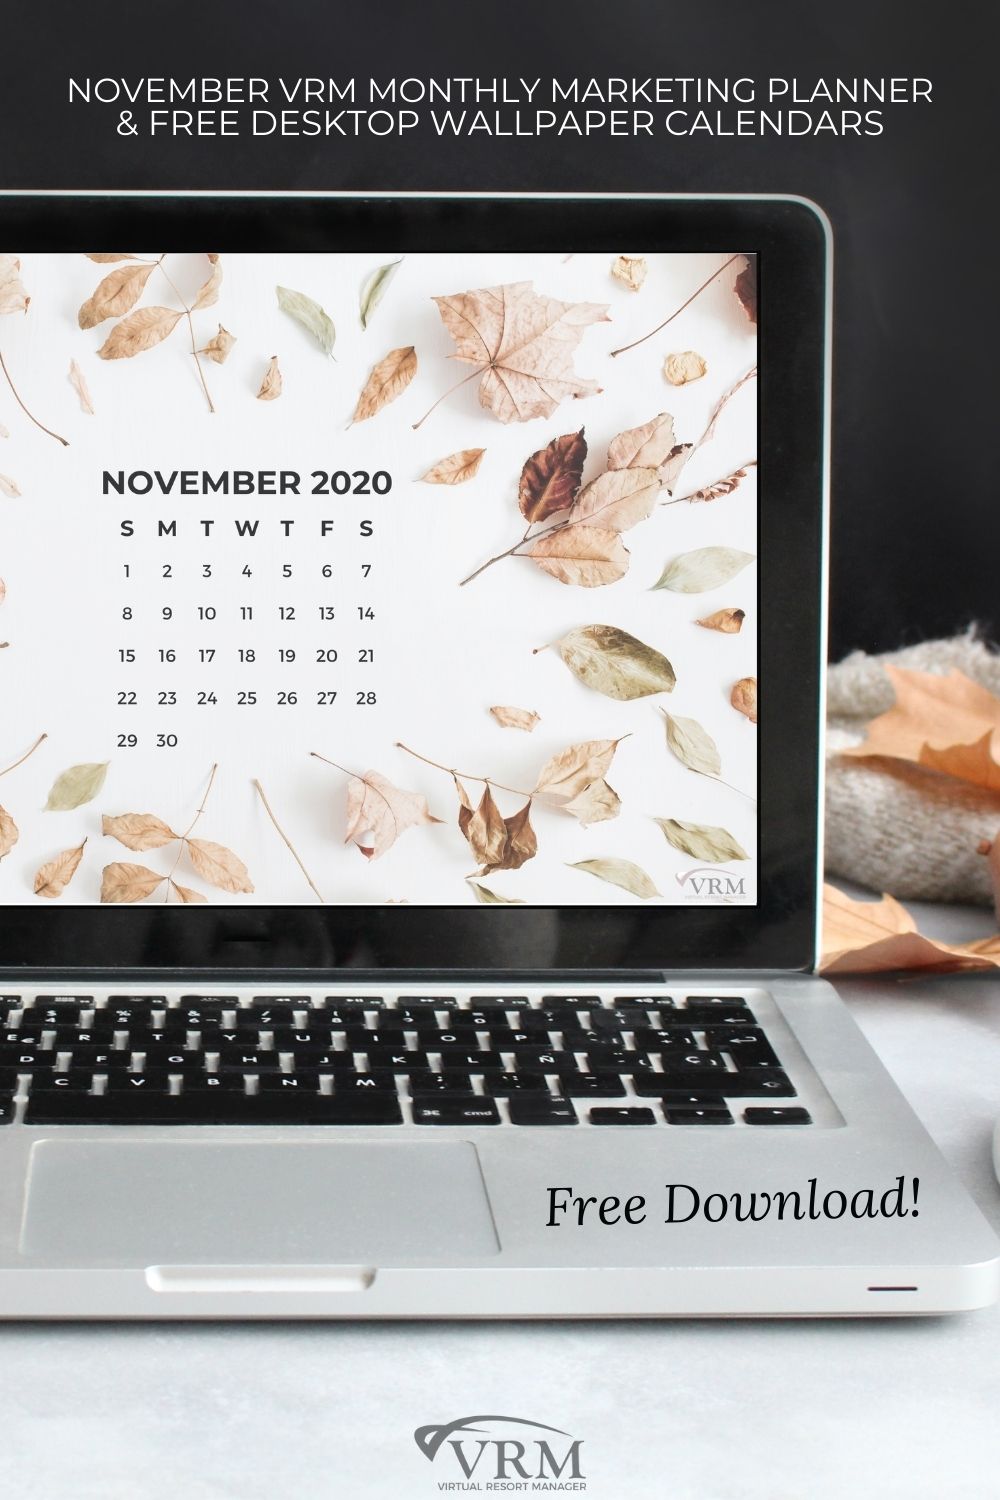 November VRM Monthly Marketing Planner and Free Desktop Wallpaper Calendars